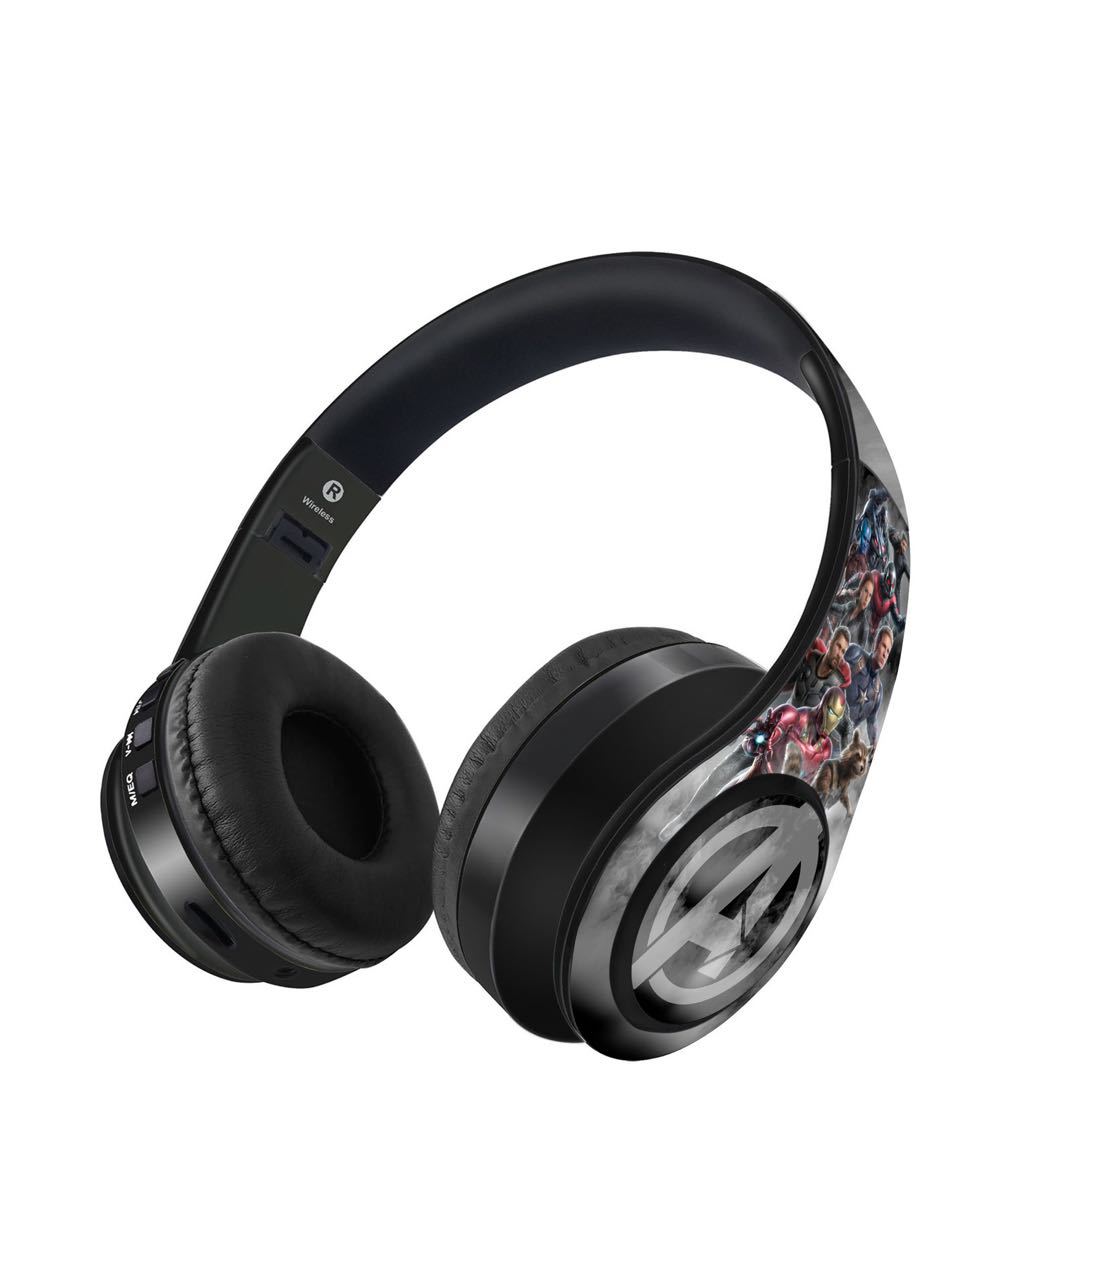 Endgame Greyhound - Pro Wireless On Ear Headphones